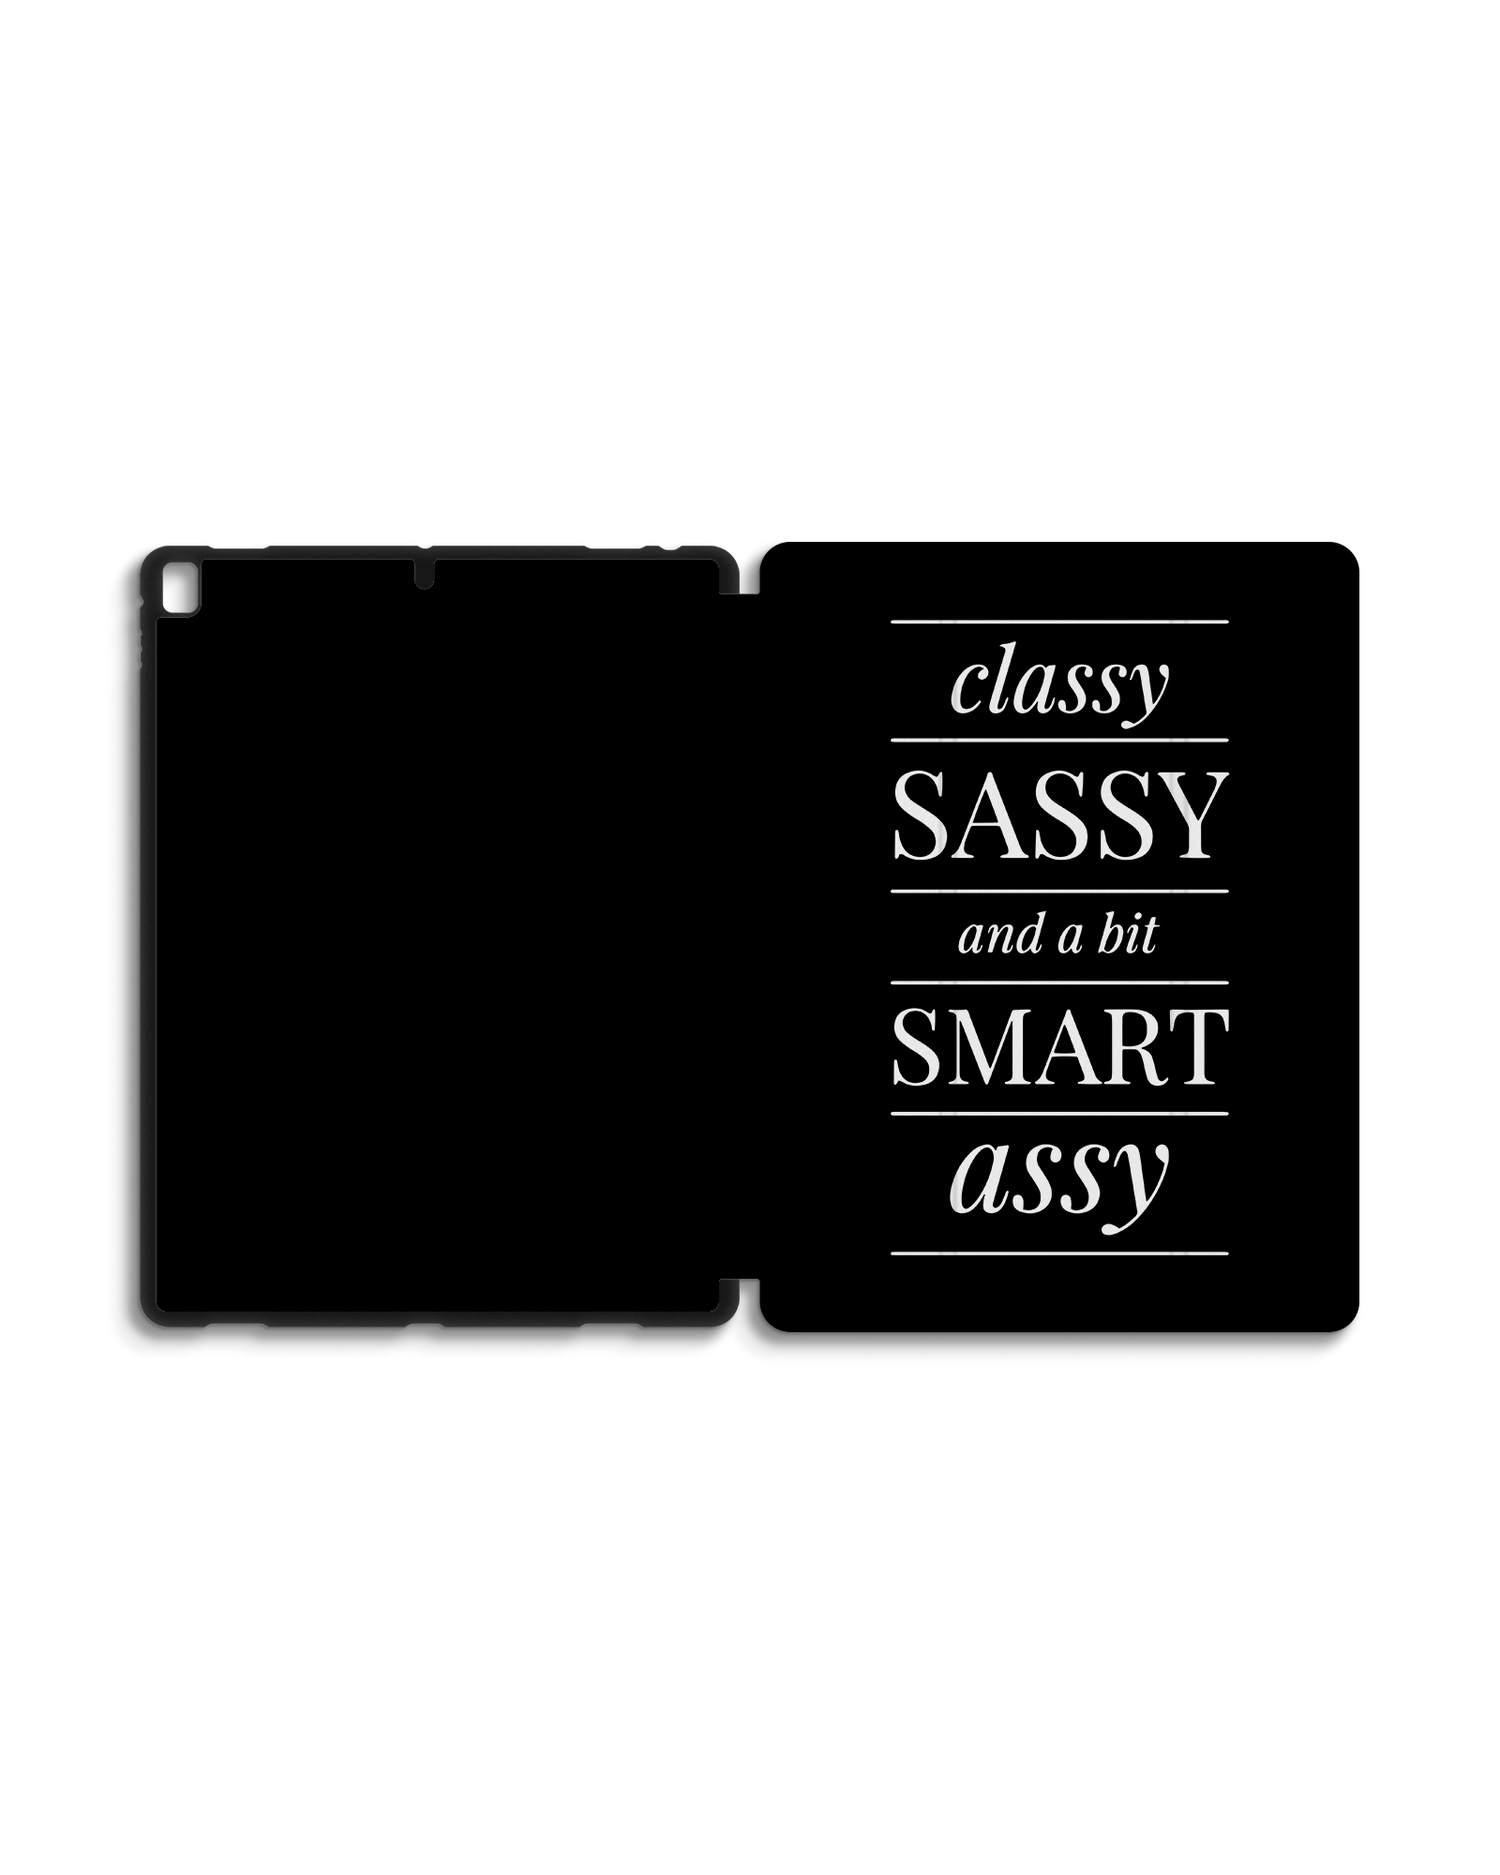 Classy Sassy iPad Case with Pencil Holder for Apple iPad Pro 2 12.9